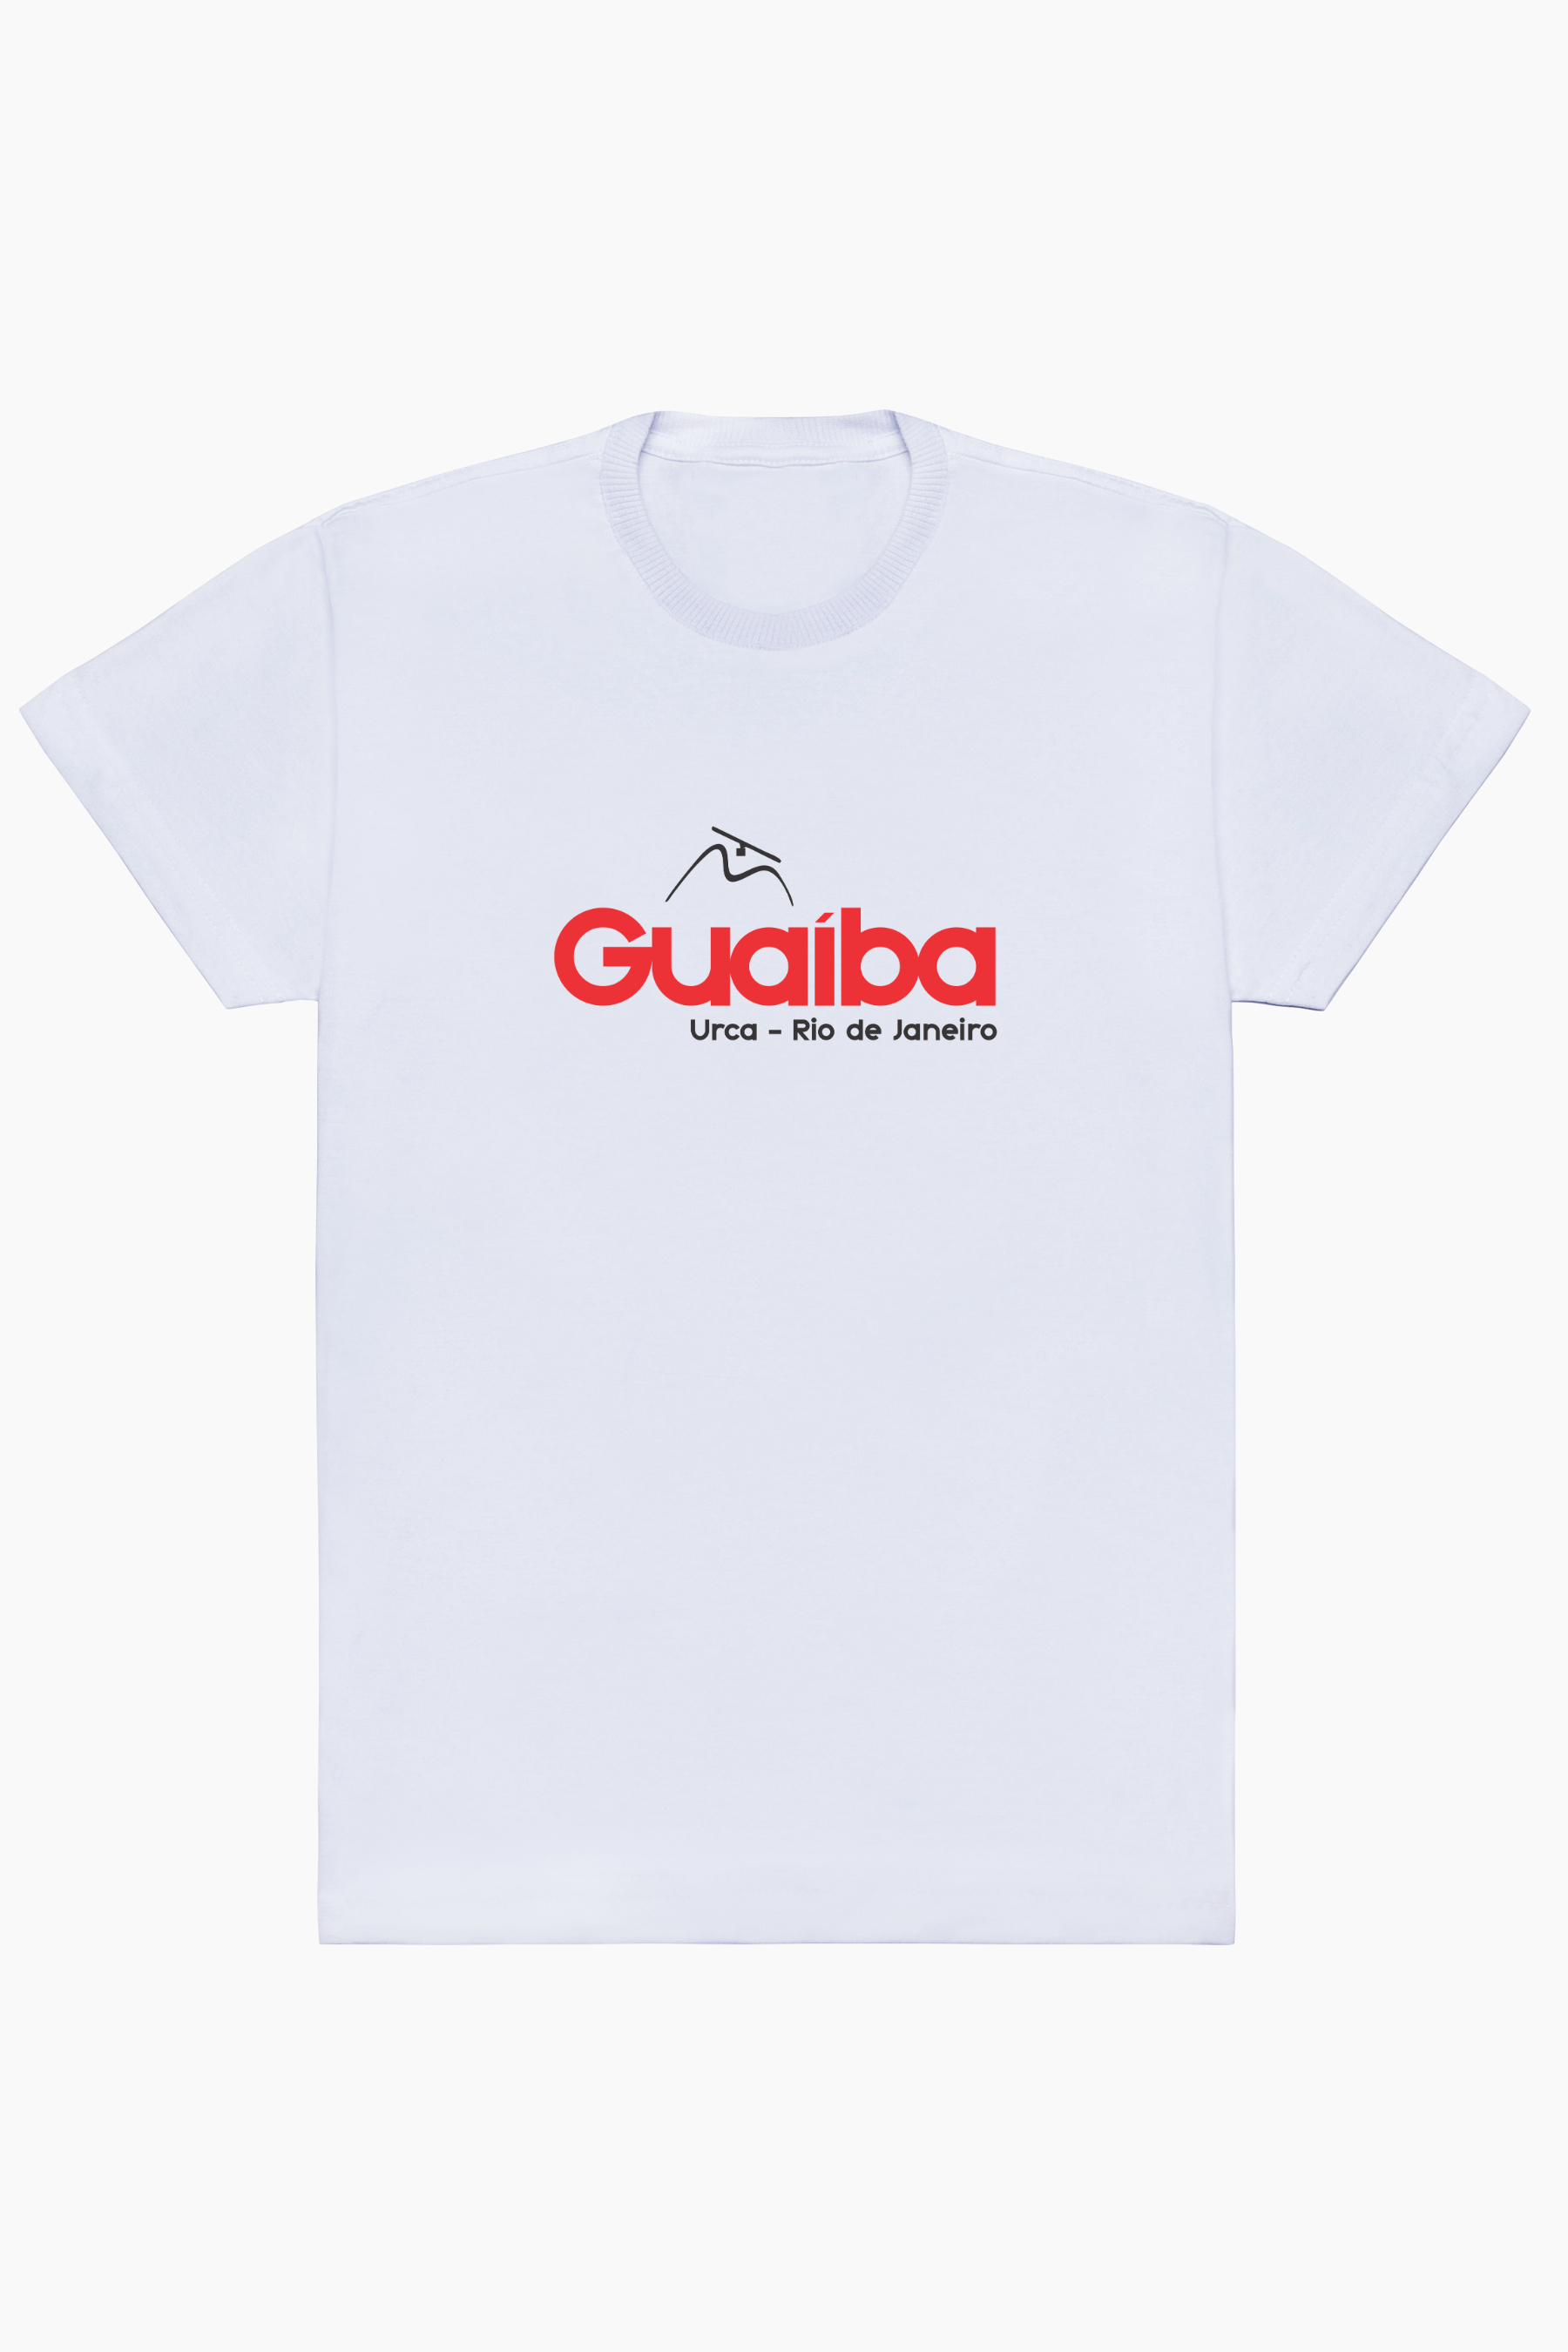 Camiseta Galera da Urca - Guaíba Praia Clube - Urca